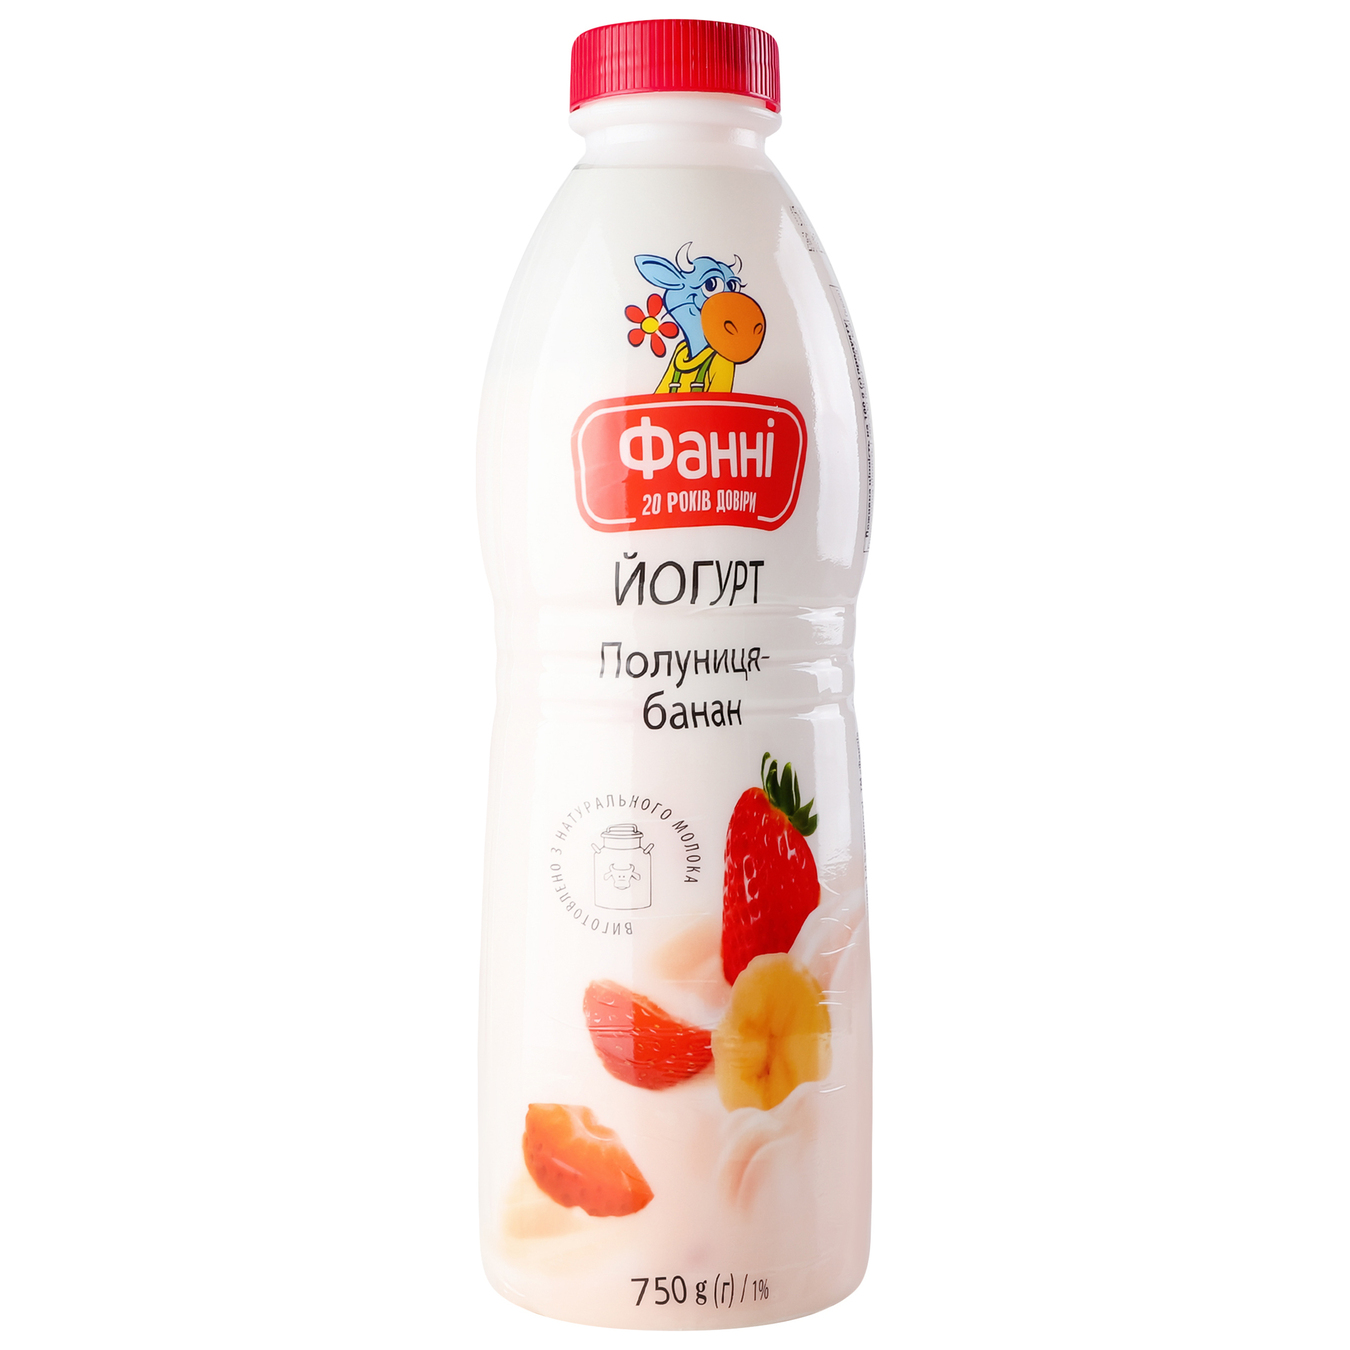 Fanny yogurt with strawberry-banana filling drinking bottle 1% 750g 2